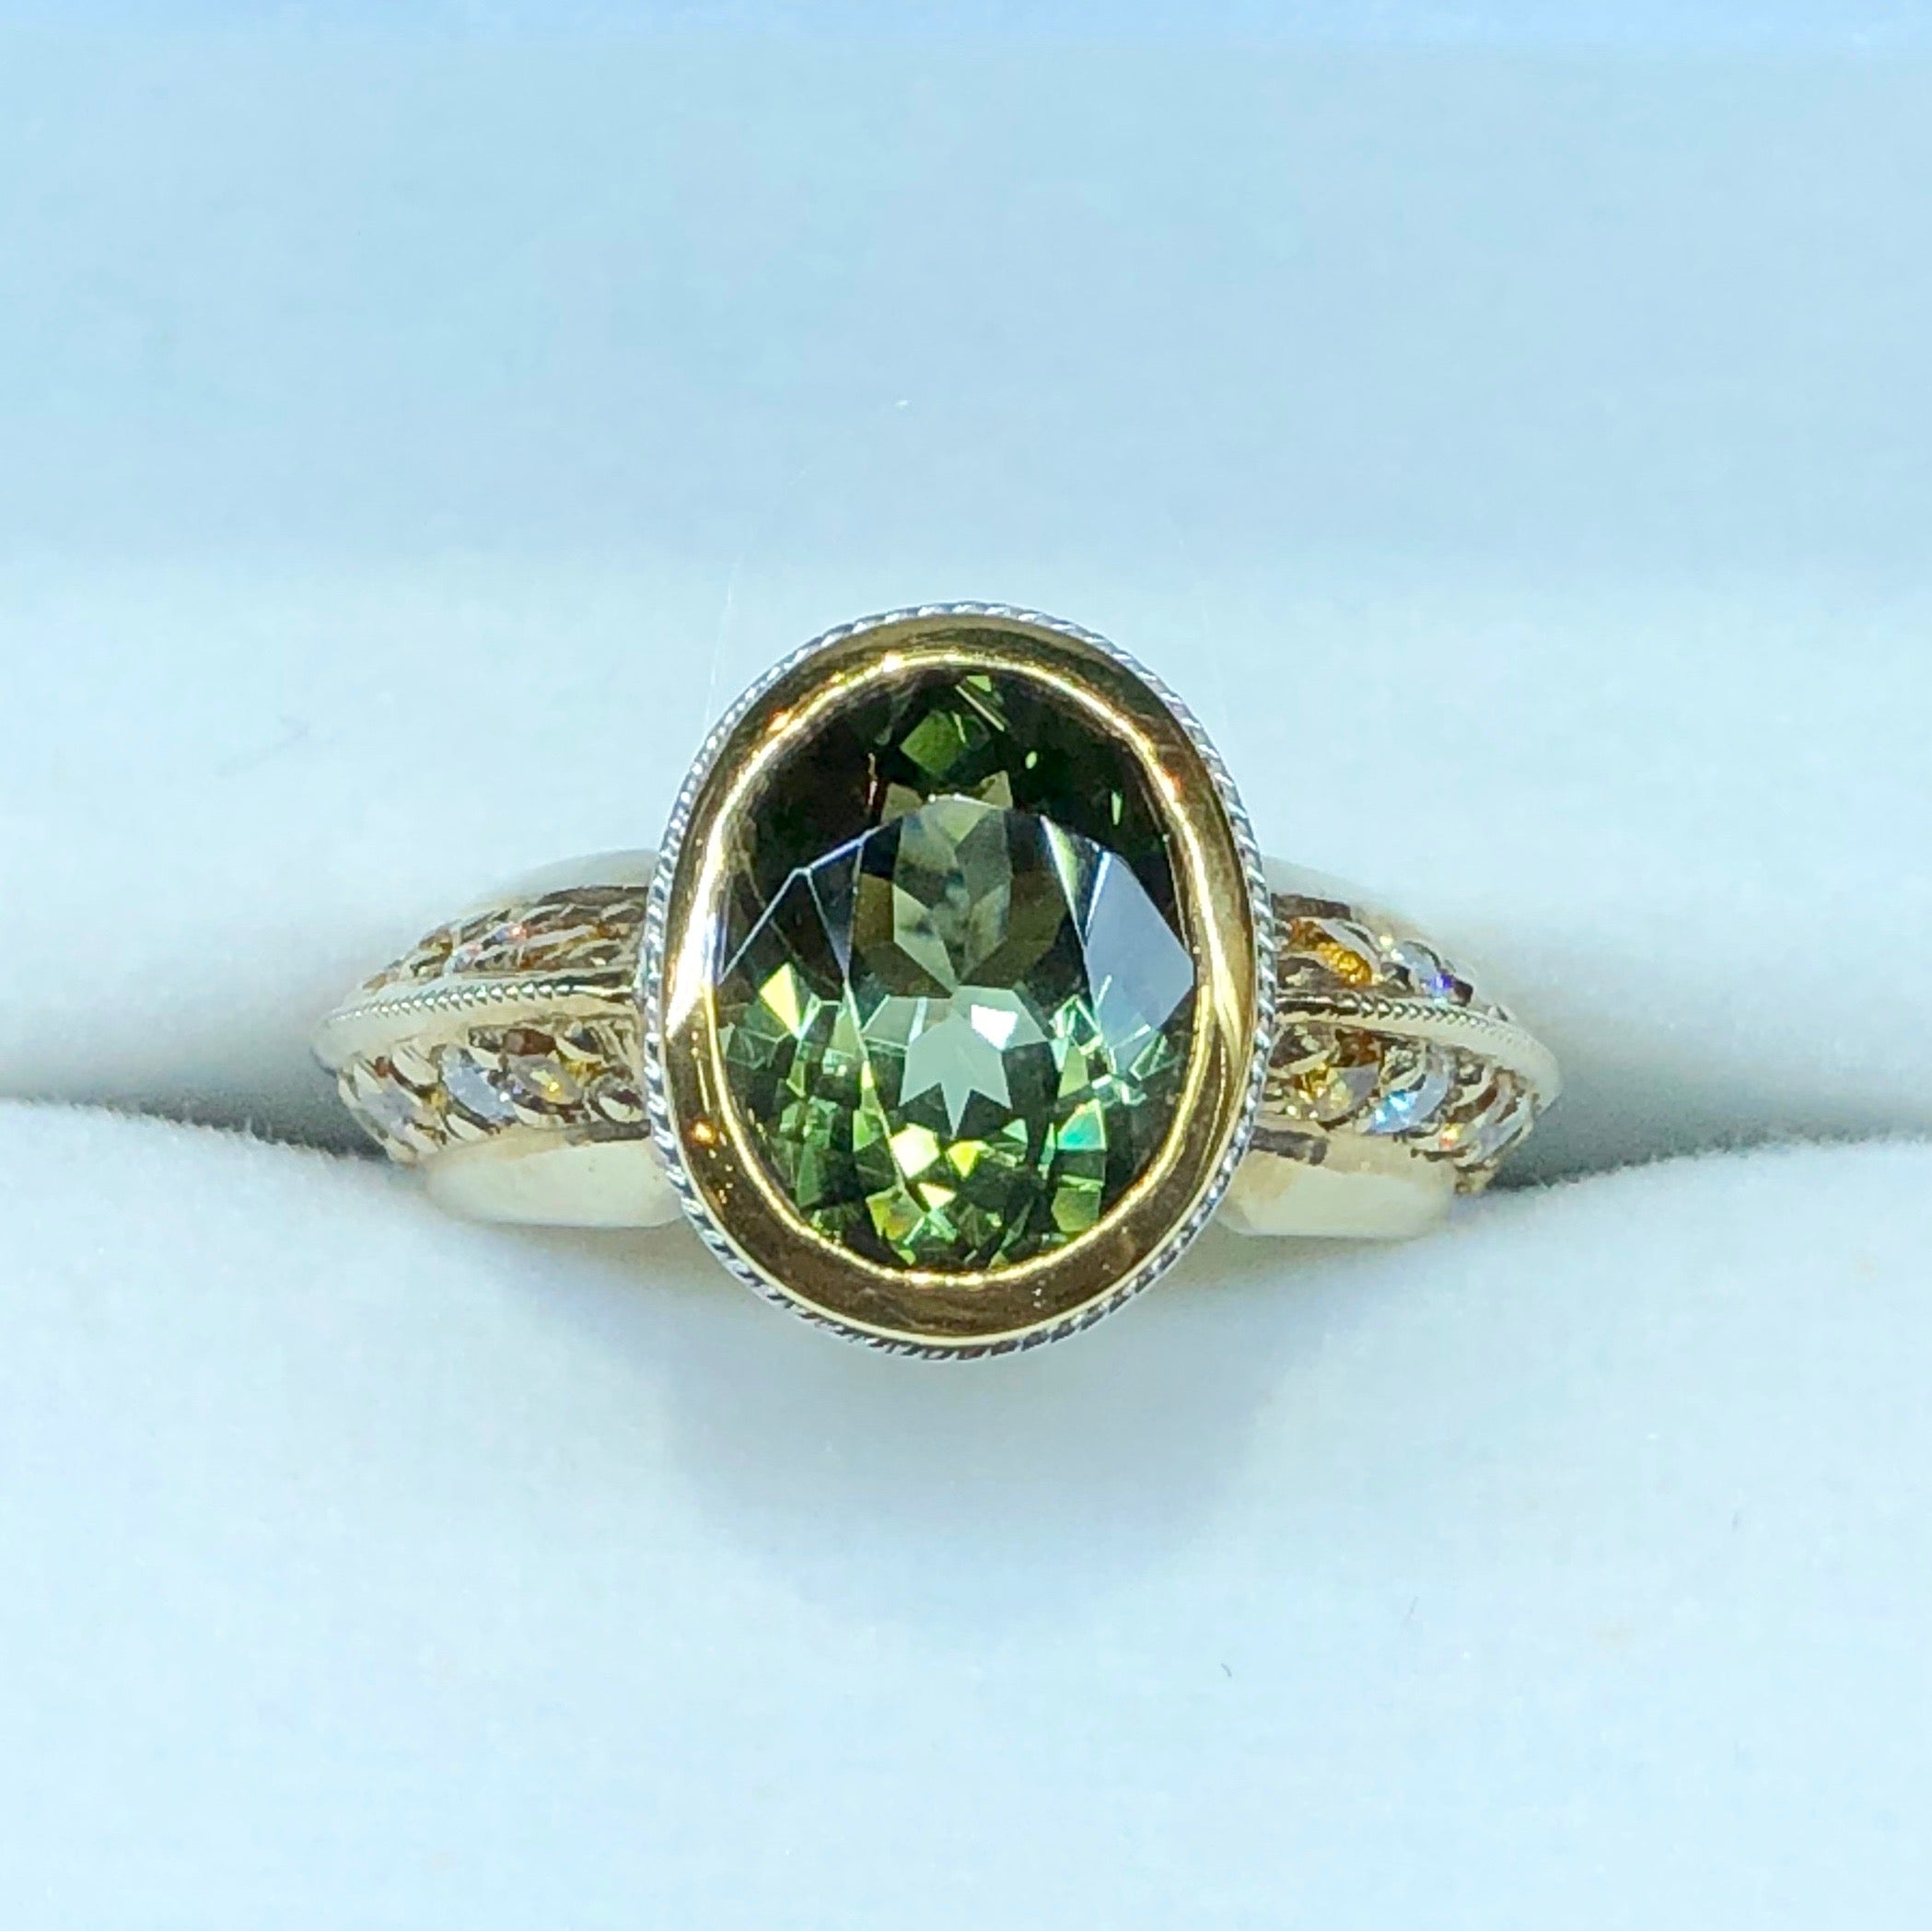 Diamond and Green Tourmaline Ring - The Diamond Guys Collection